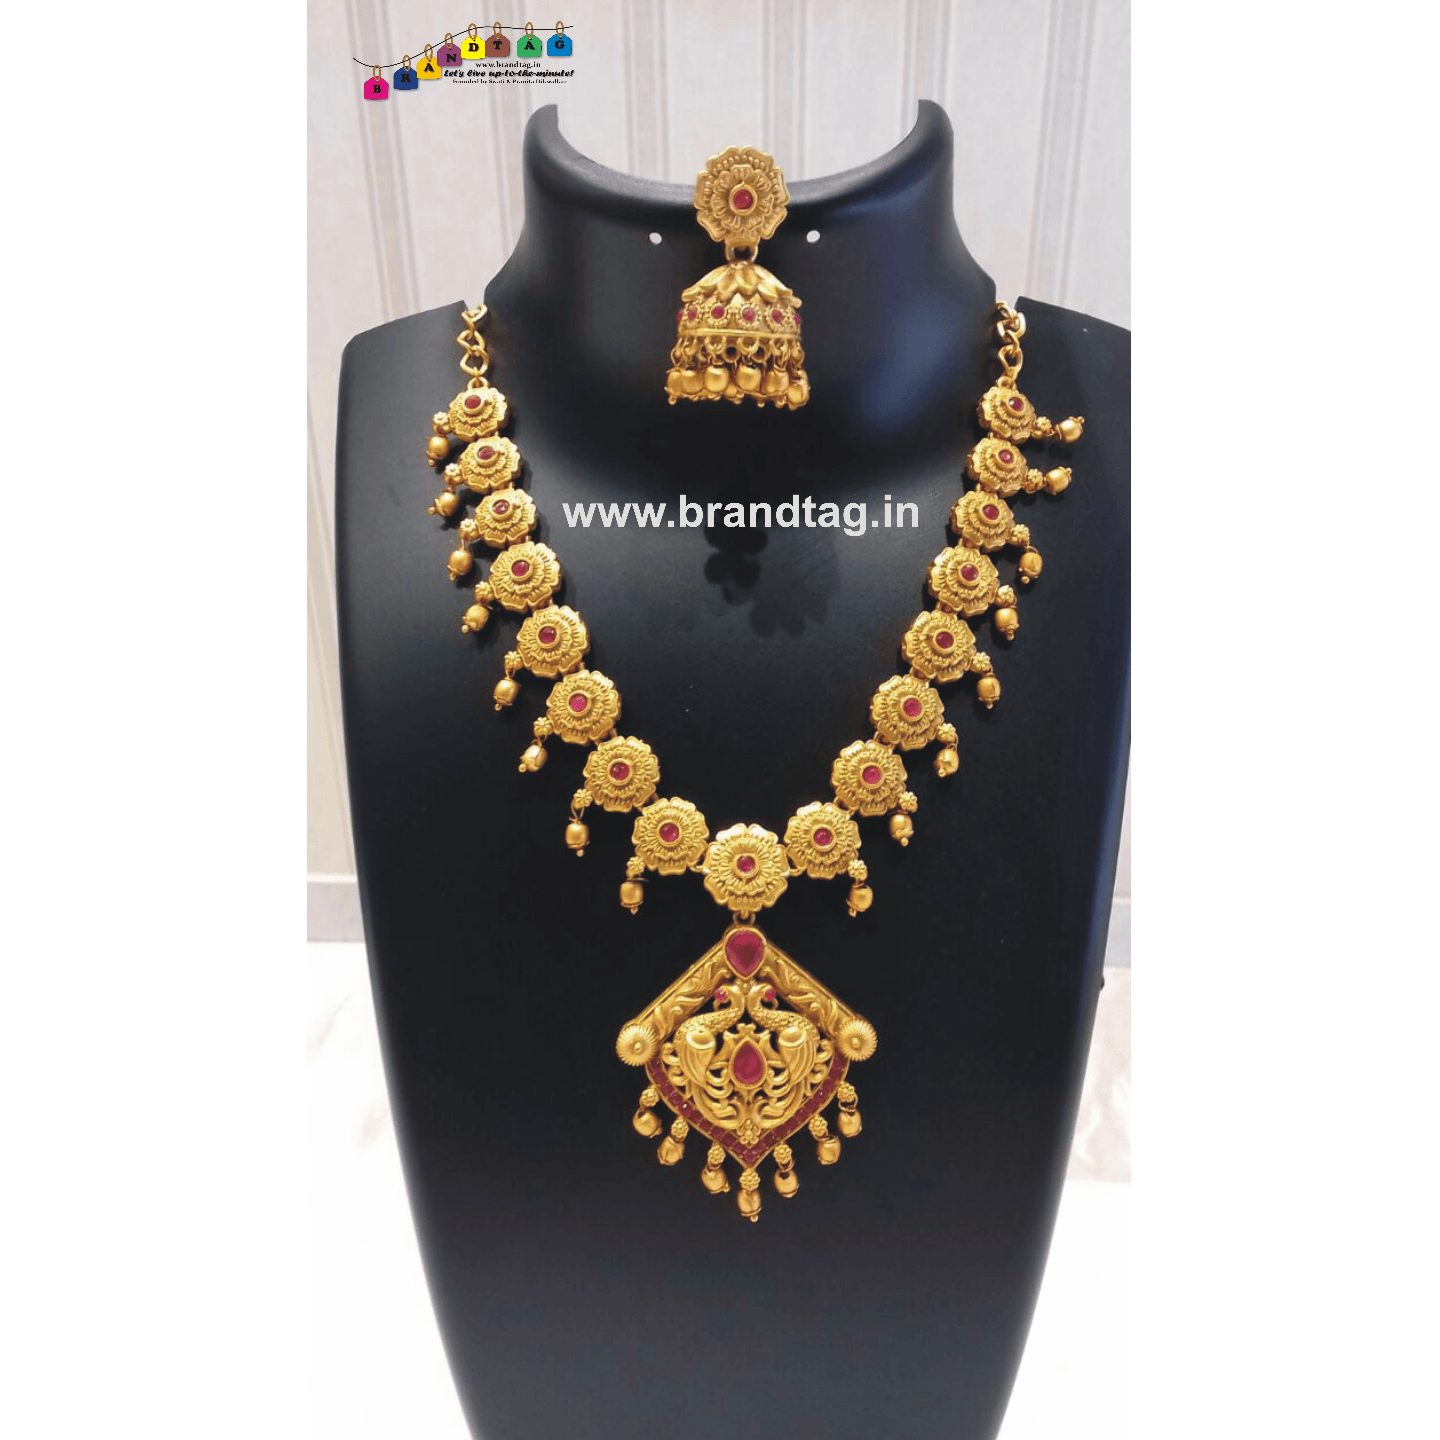 Diwali Collection - Captivating Golden Necklace Set!